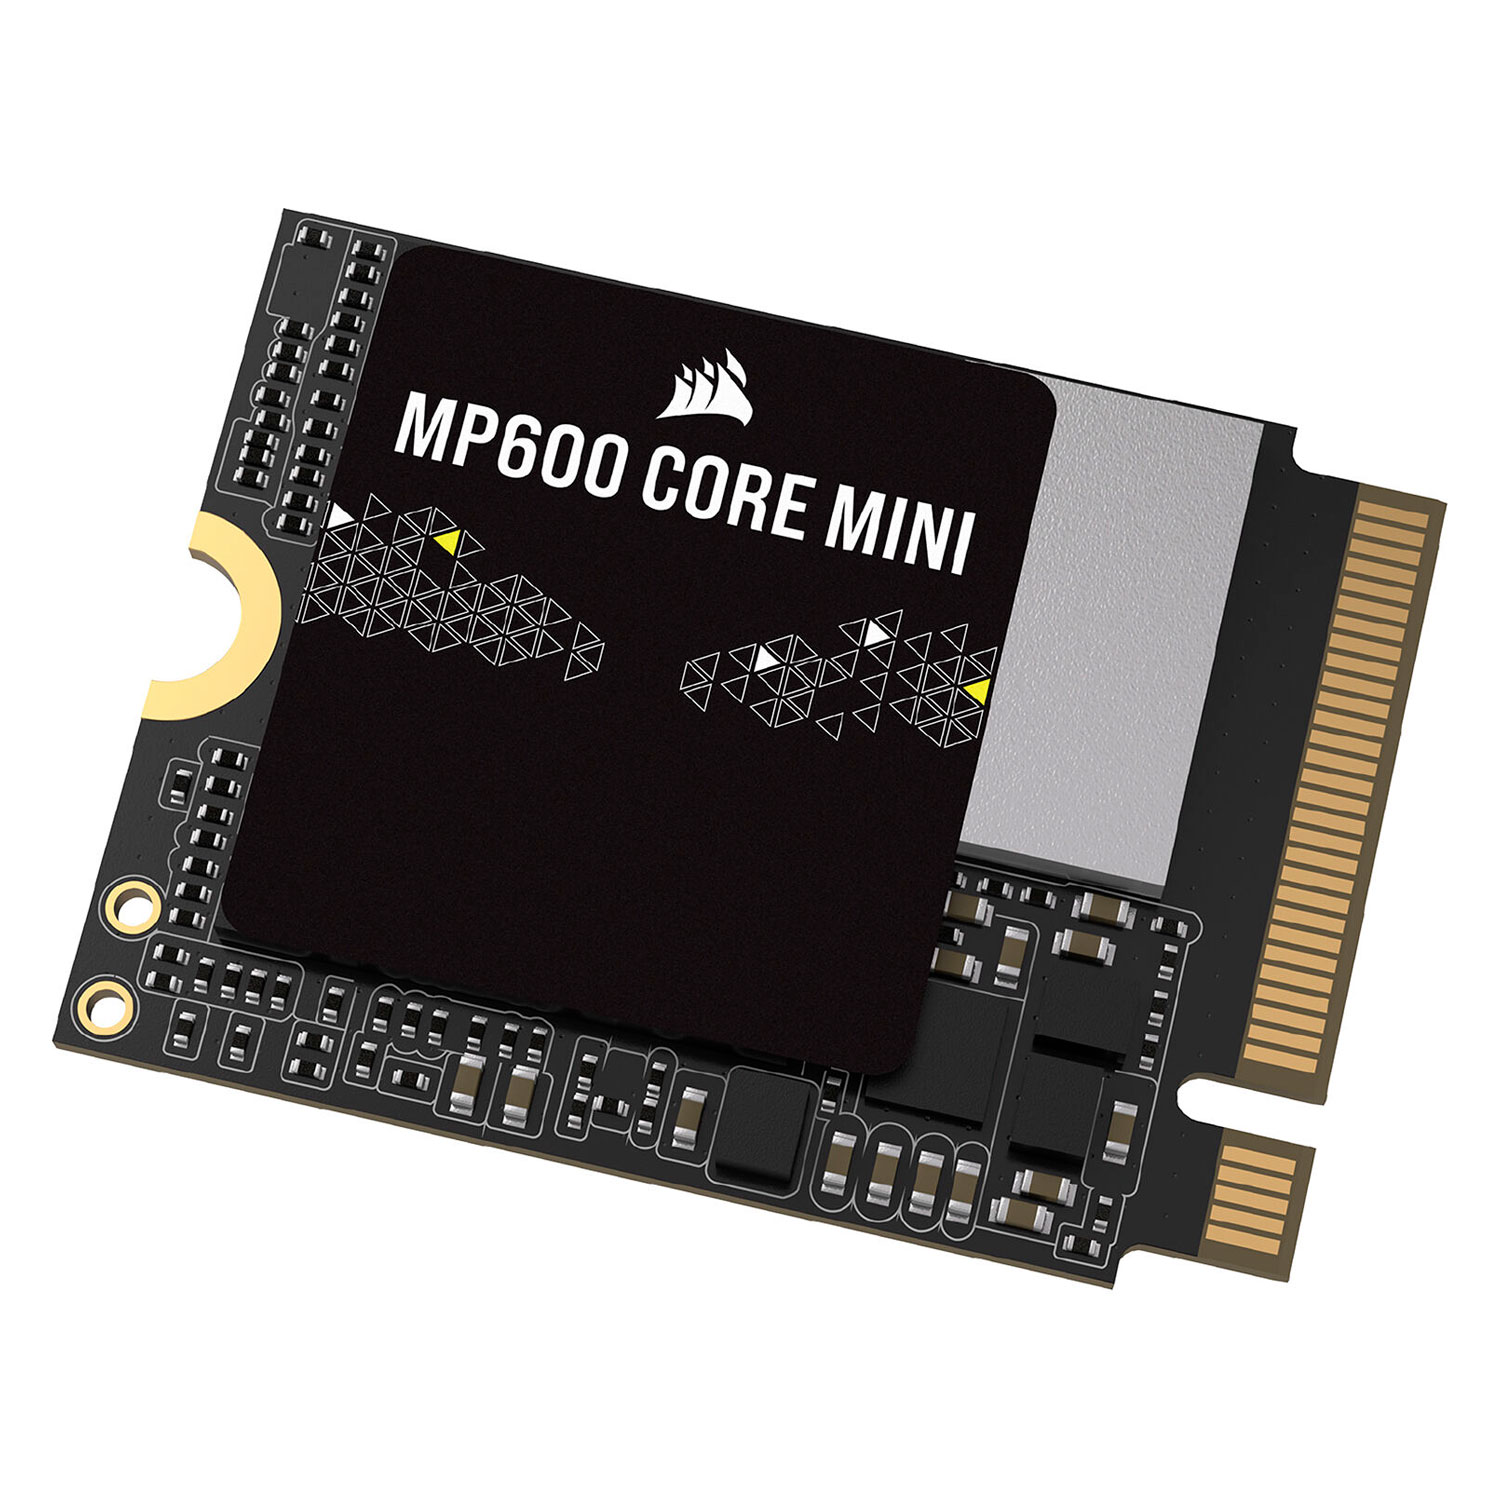 SSD M.2 Corsair MP600 Core Mini 2TB NVMe PCIe 4.0 - CSSD-F2000GBMP600CMN